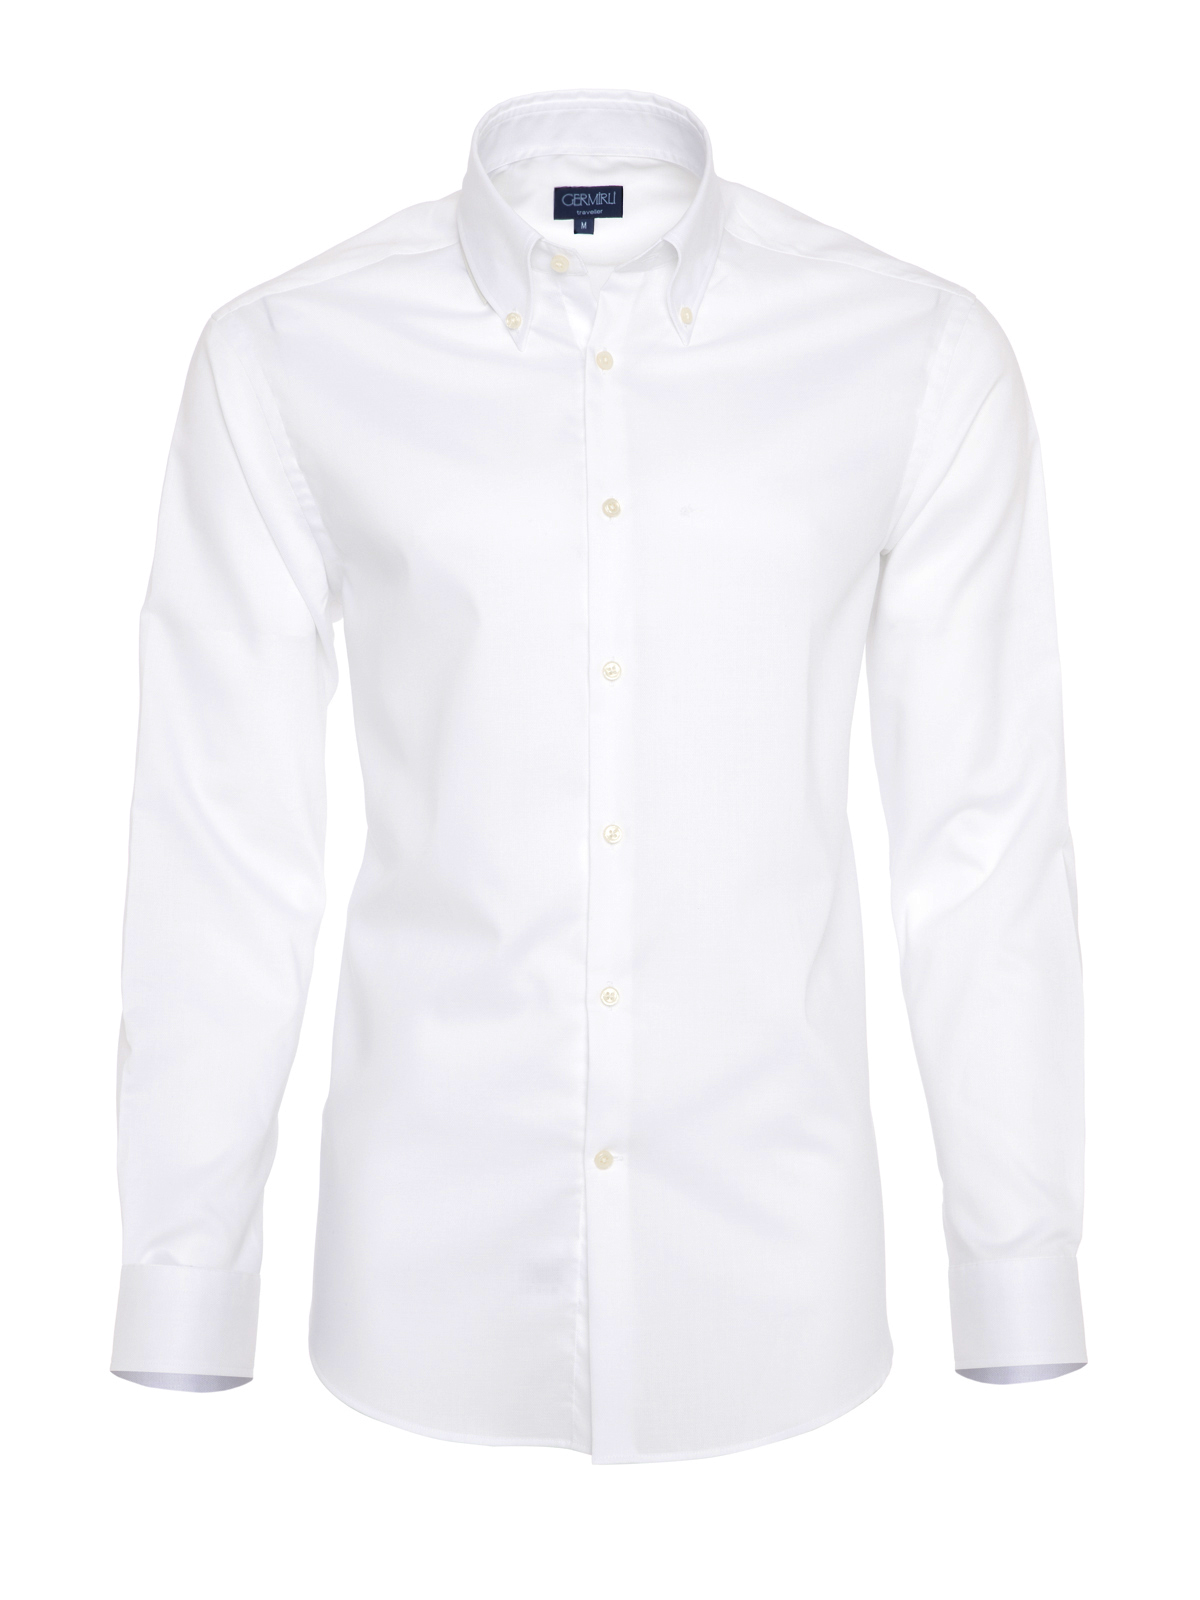 Germirli - Germirli Non Iron White Oxford Button Down Collar Tailor Fit Shirt